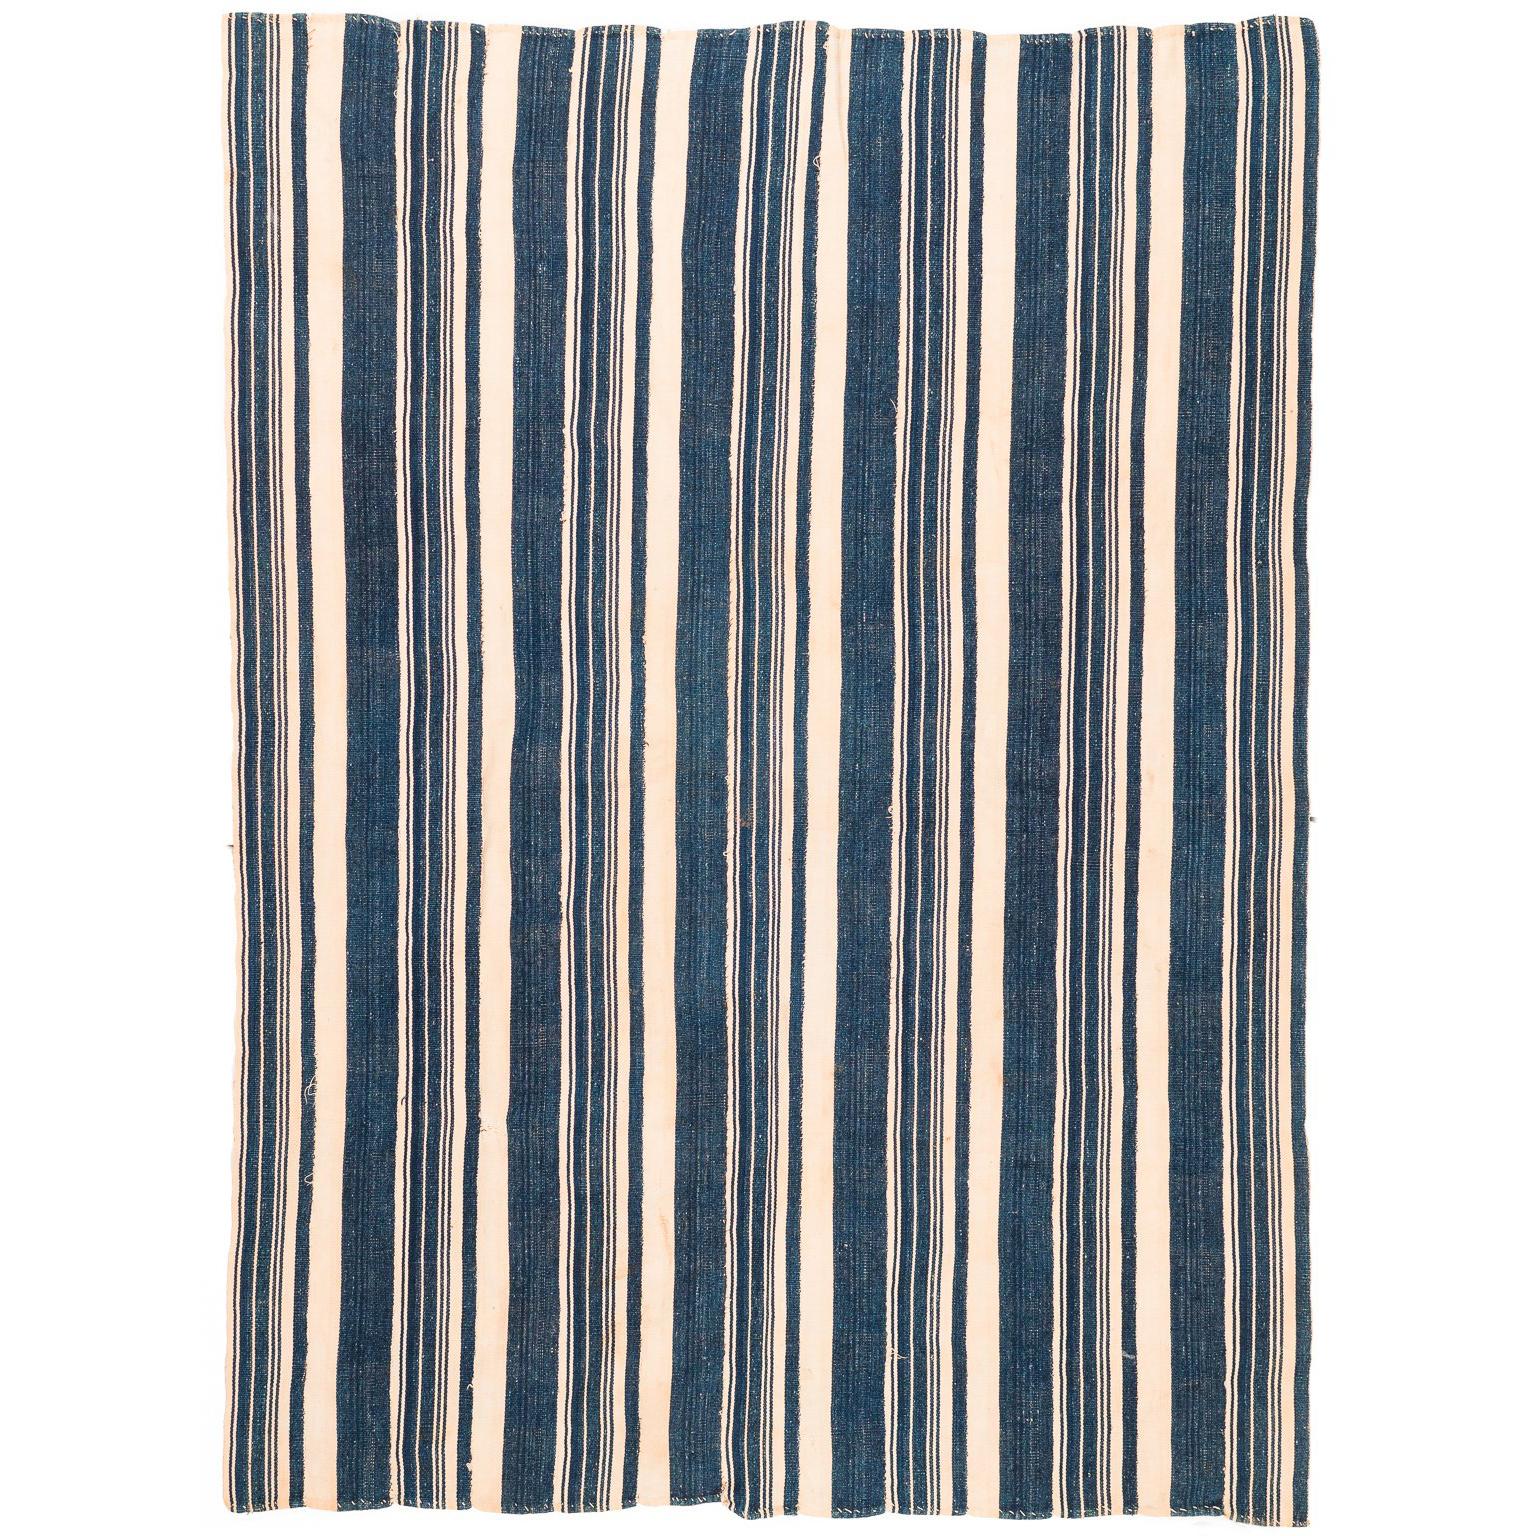 Portefeuille africain vintage en coton bleu et blanc à rayures indigo